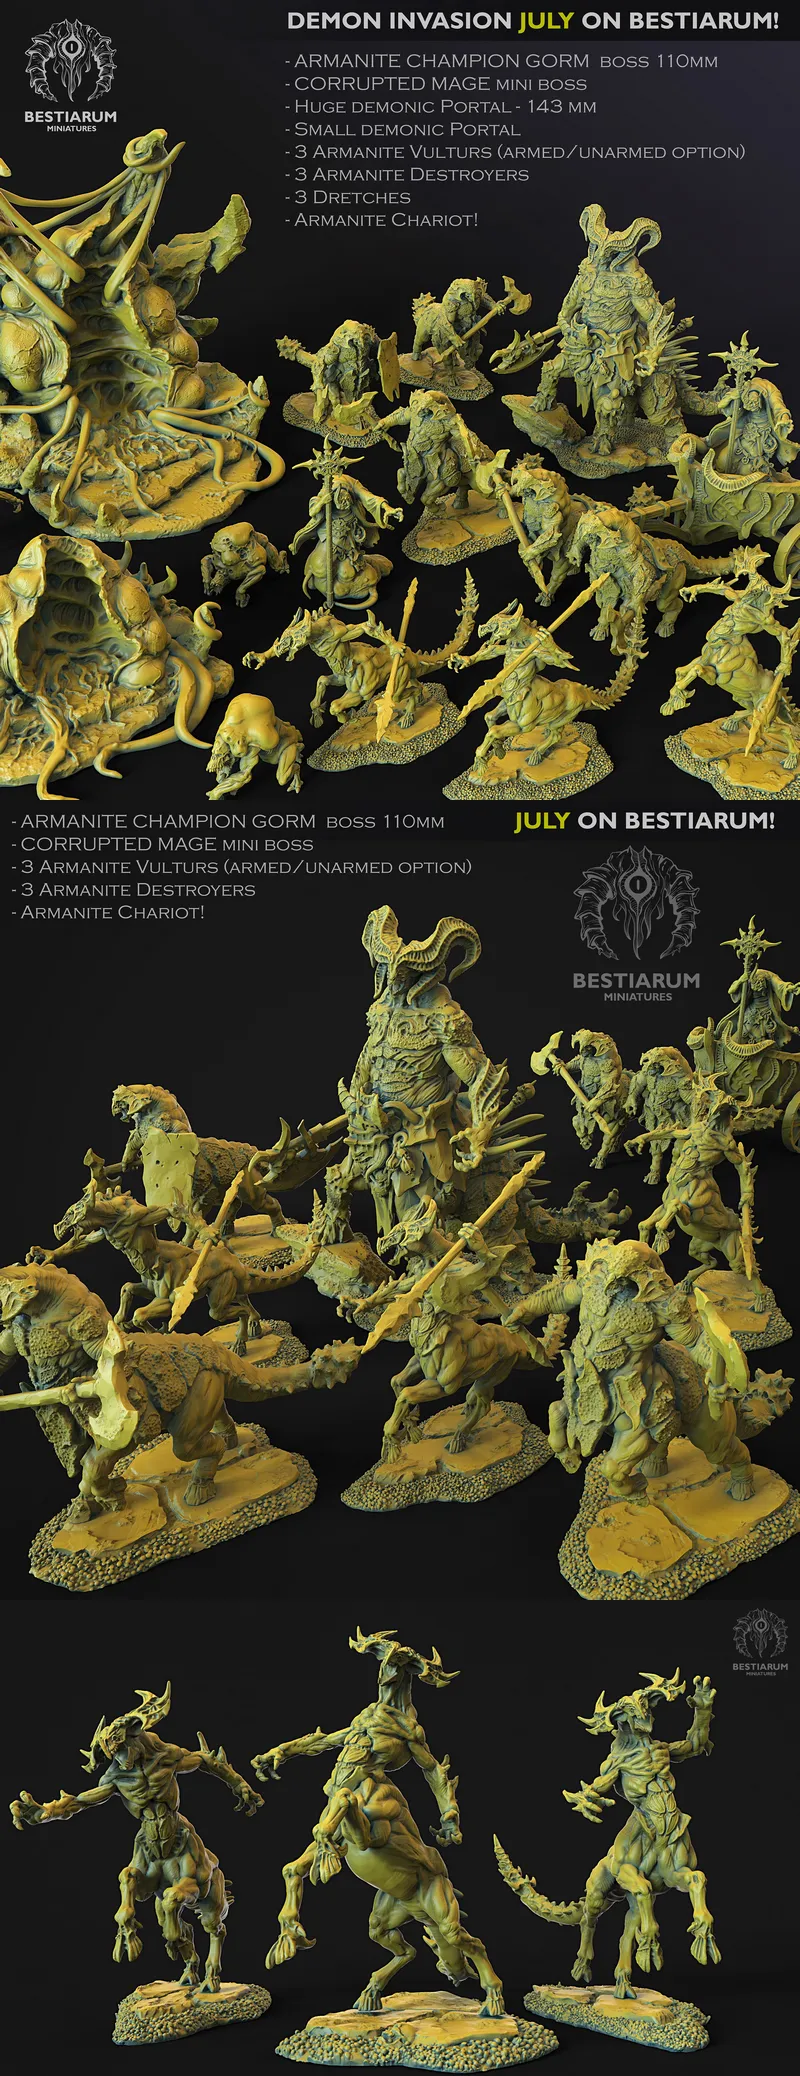 Bestiarum Miniatures - June 2020